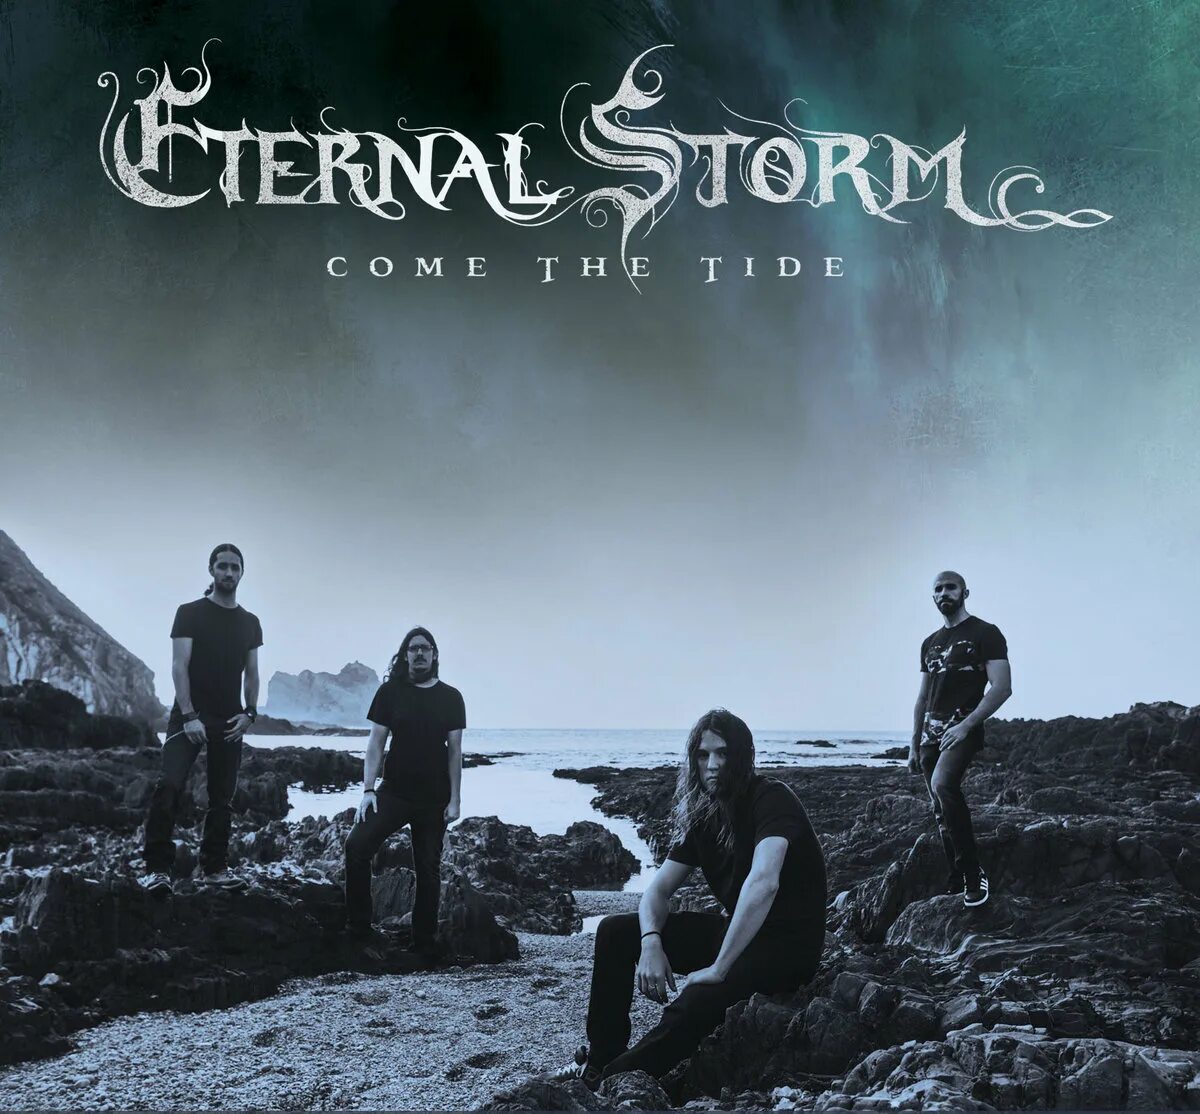 Группа Eternal. Storm группа. Eternal Storm - come the Tide.